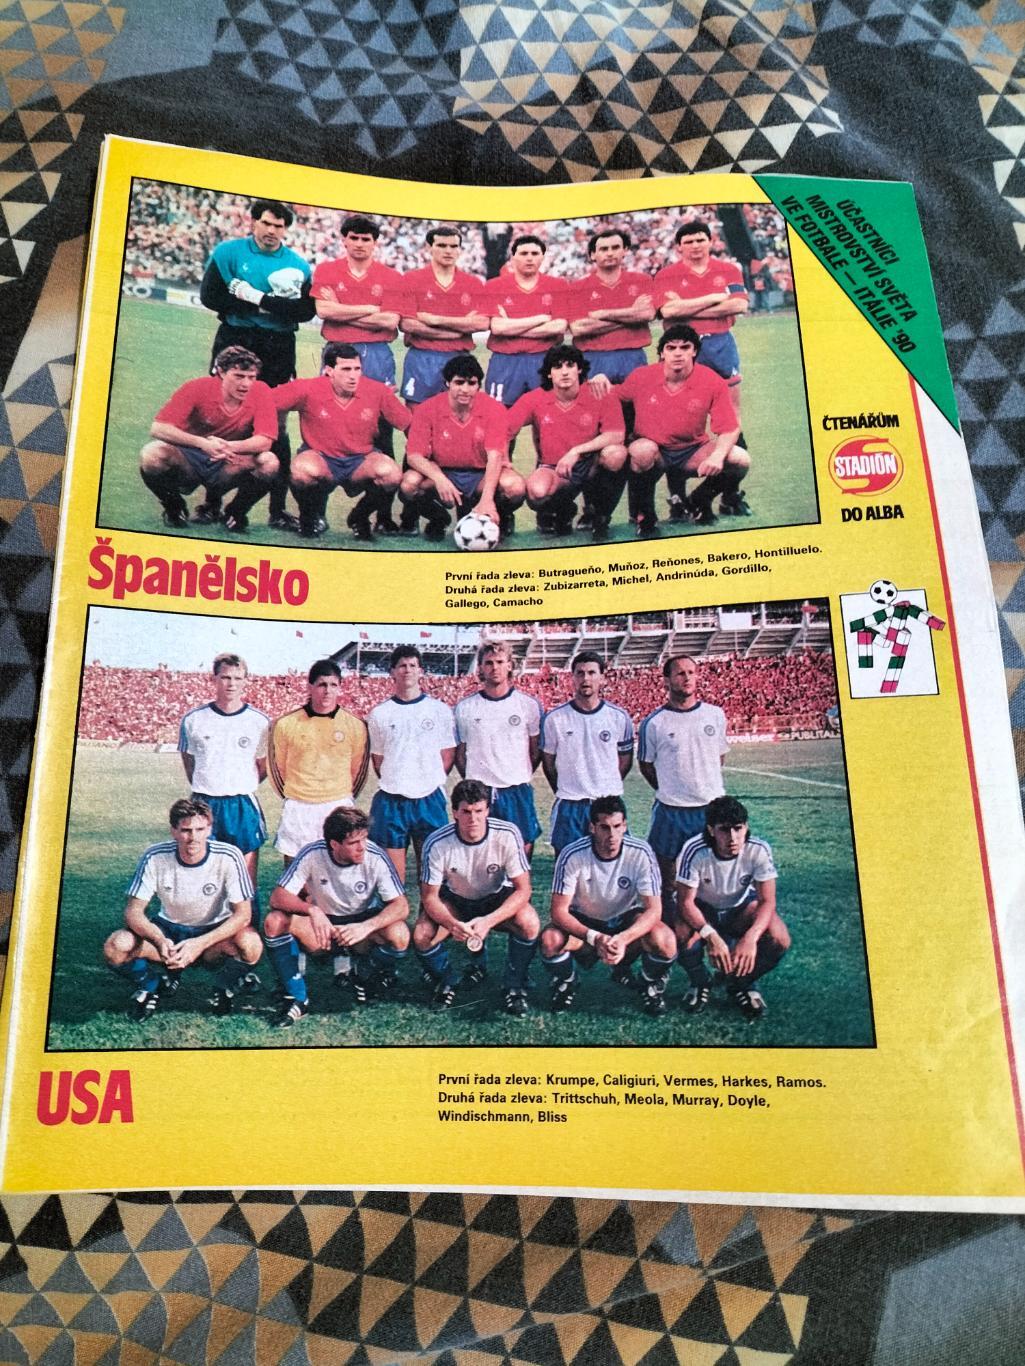 Постер из журнала Стадион.Сб.Испании и сб.США.